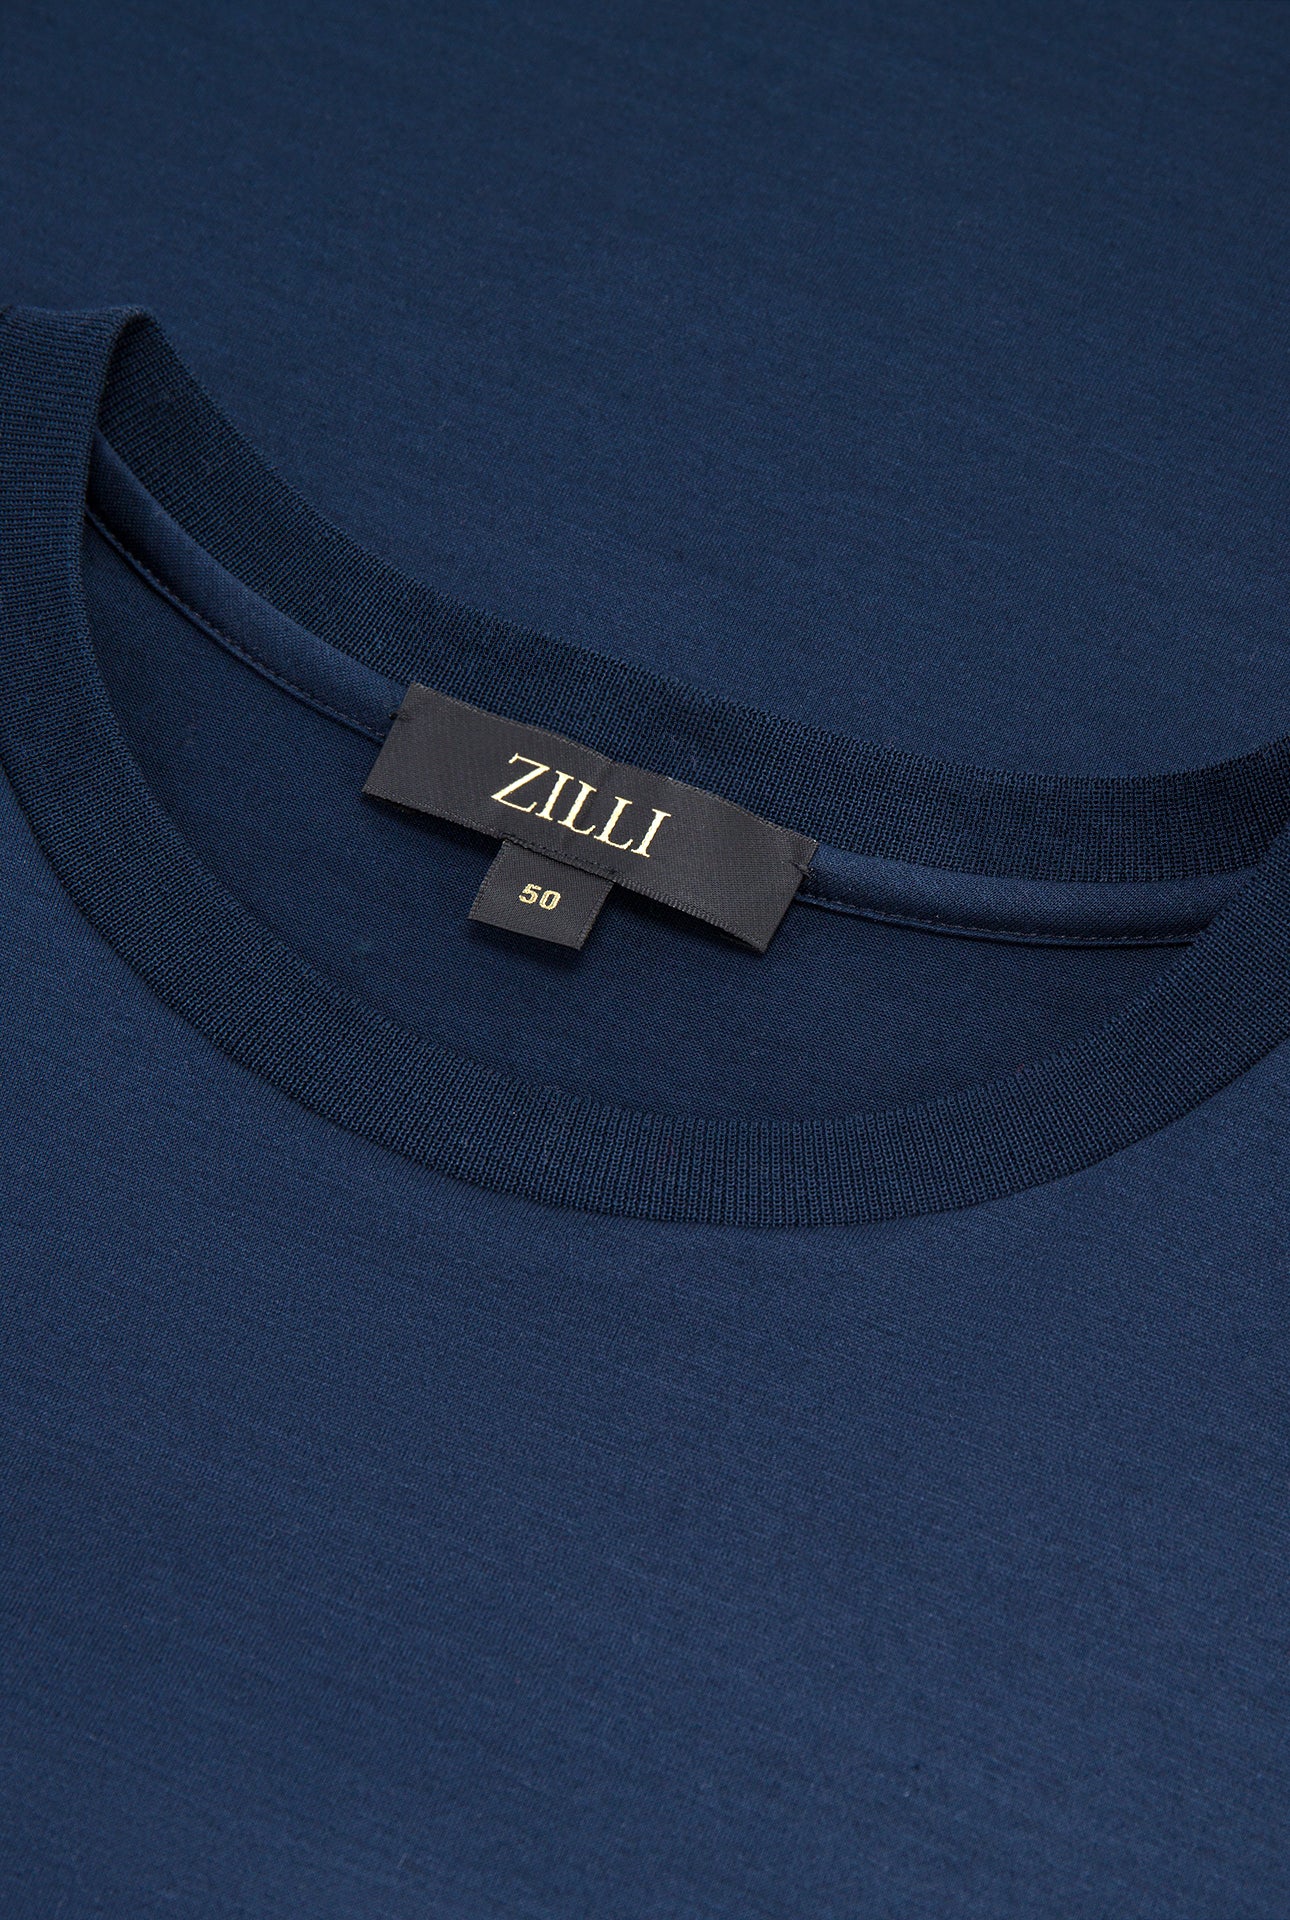 Minimalist Cotton T-Shirt Navy Blue